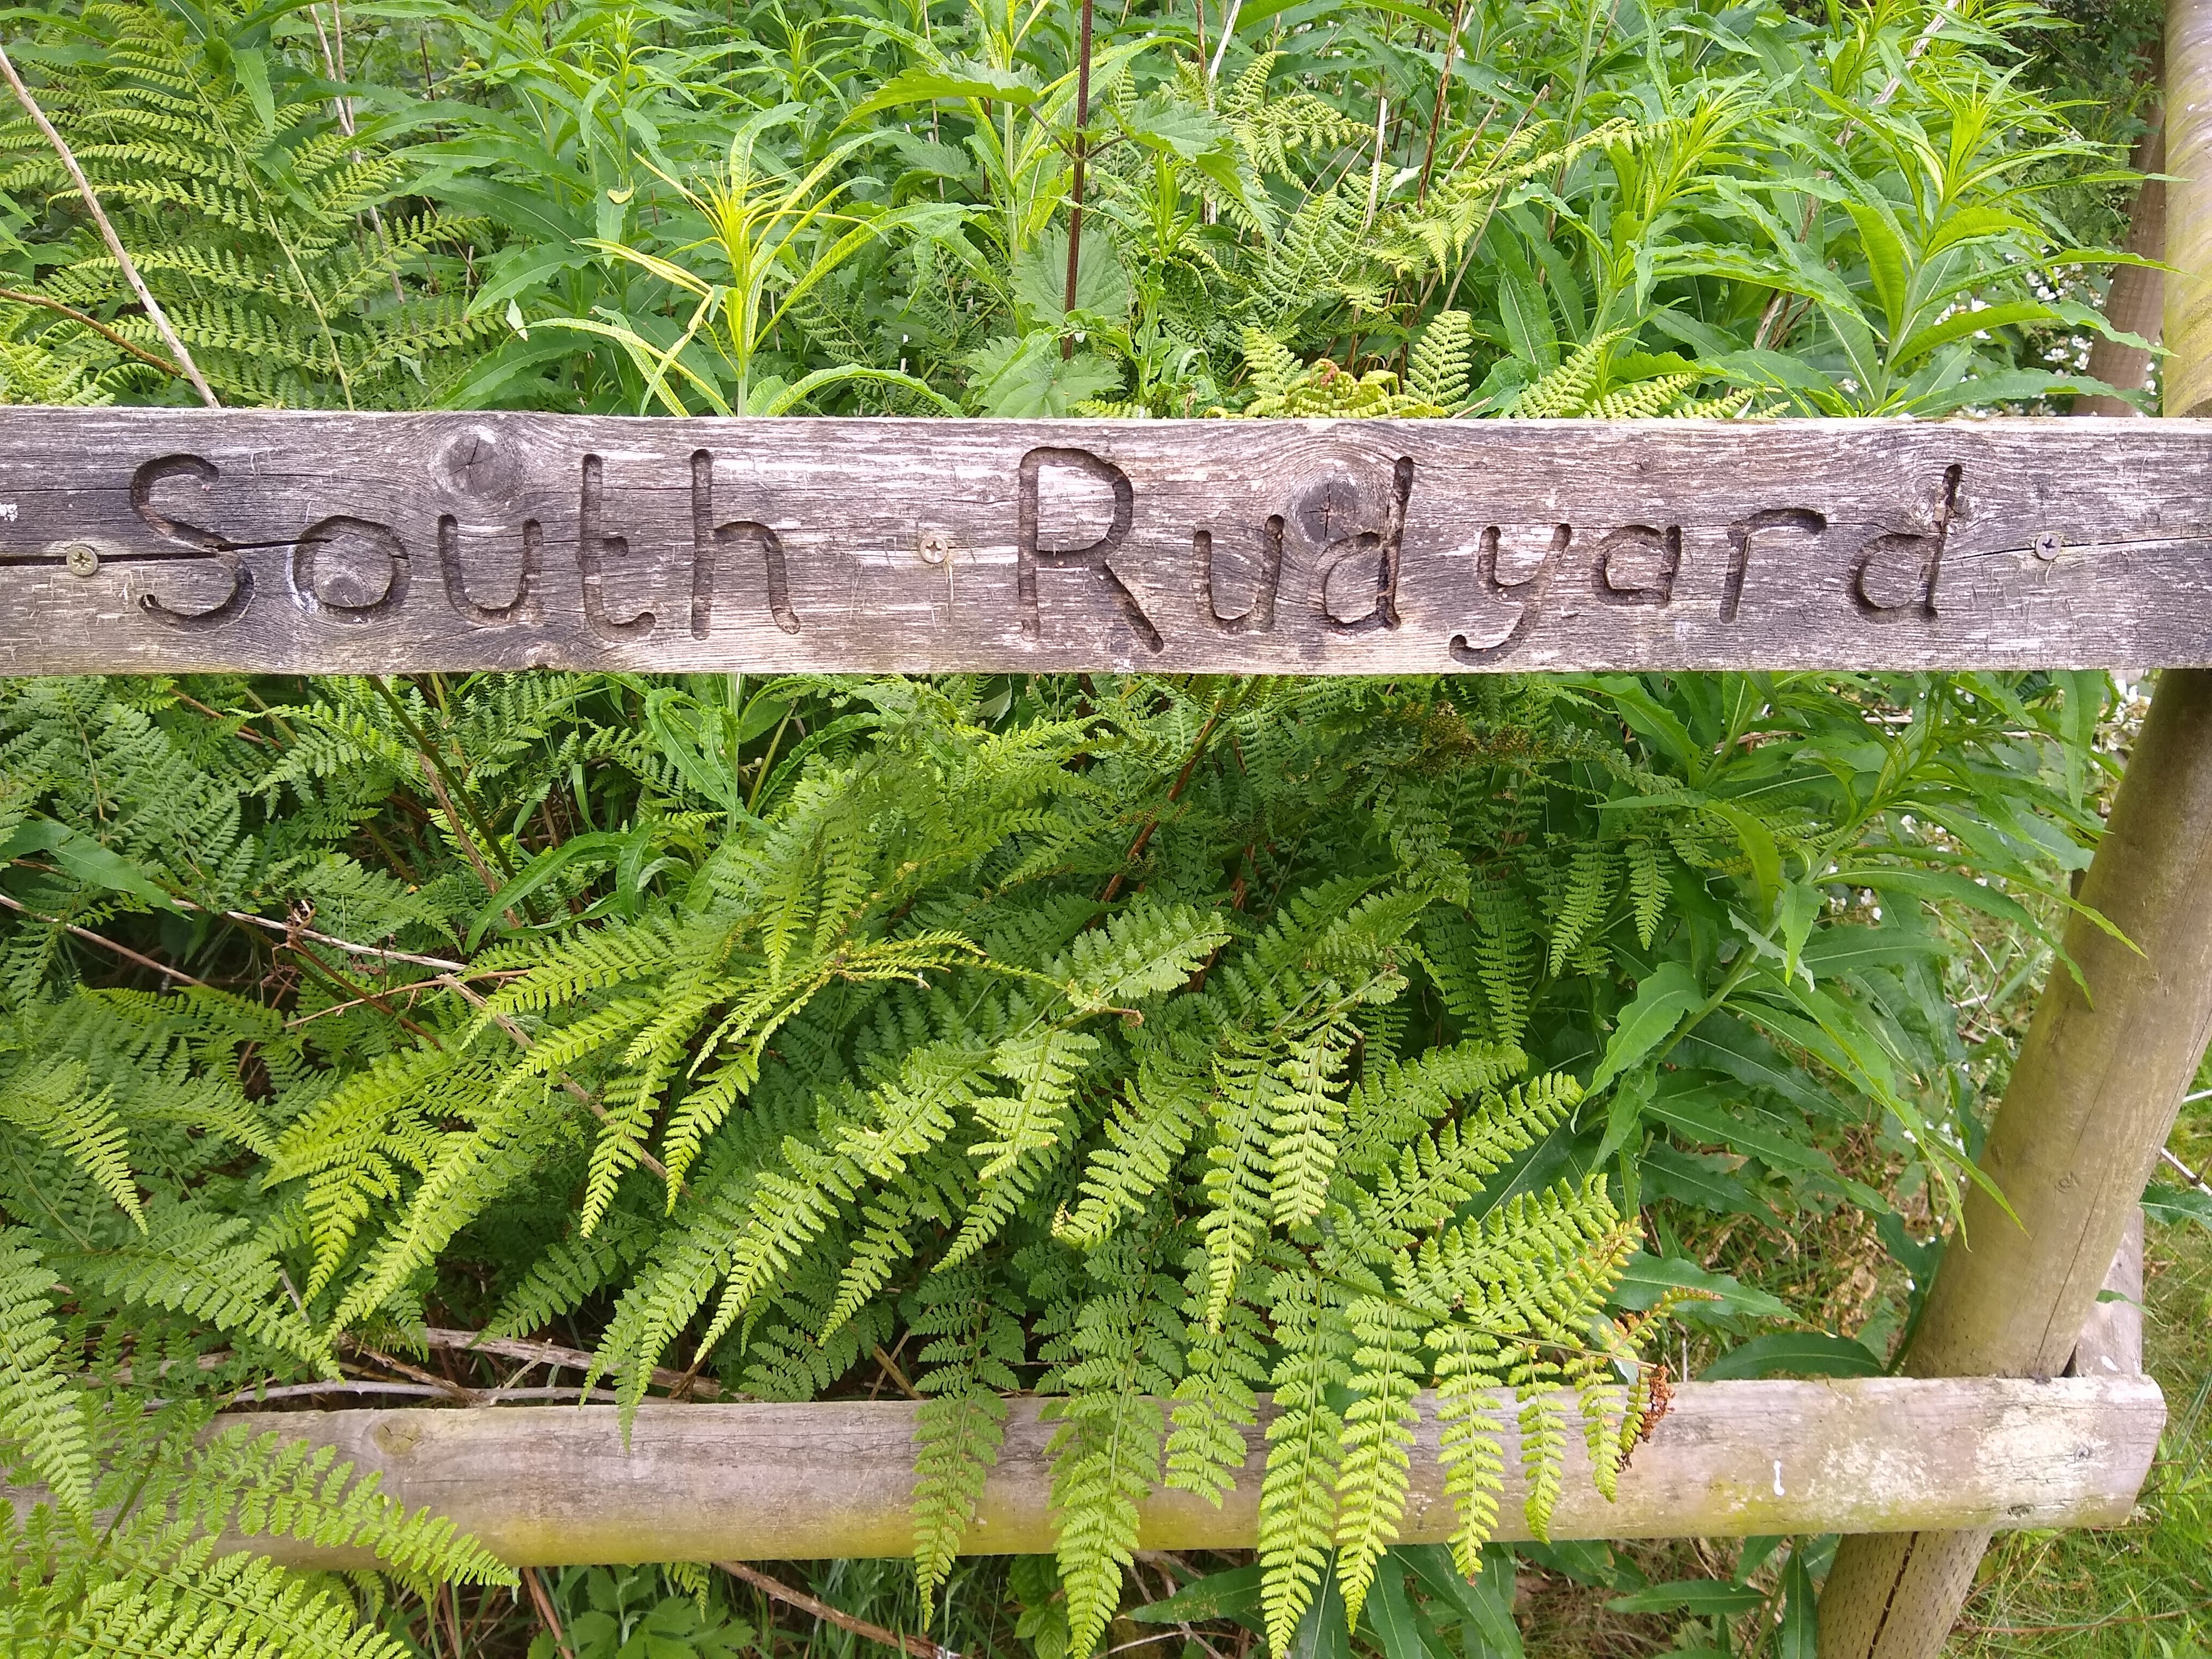 South Rudyard